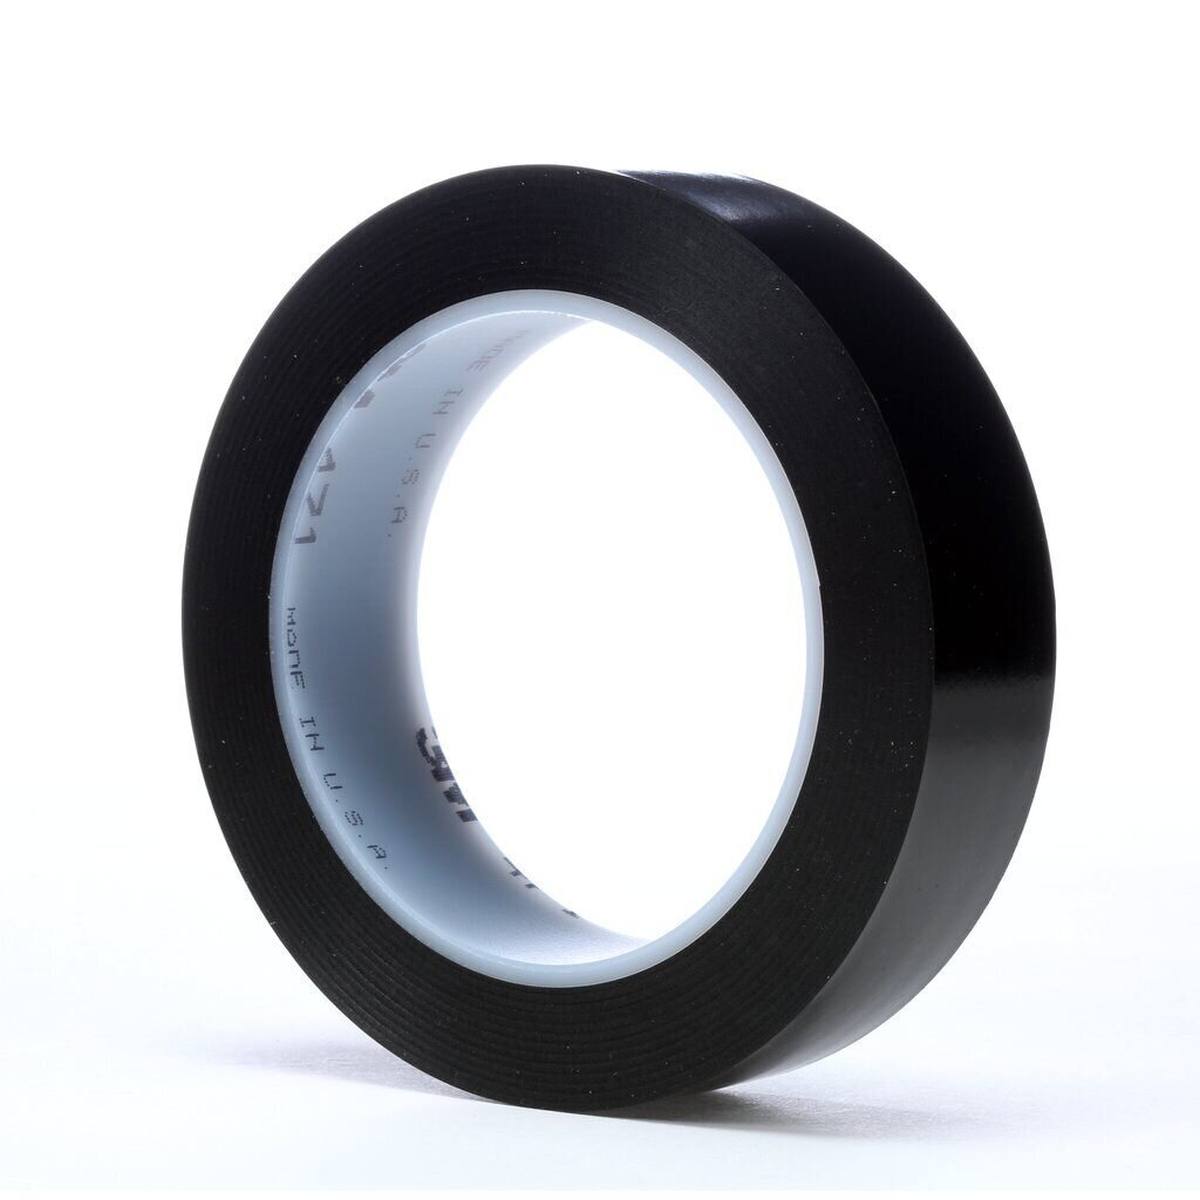 3M soft PVC adhesive tape 471 F, black, 25 mm x 33 m, 0.13 mm